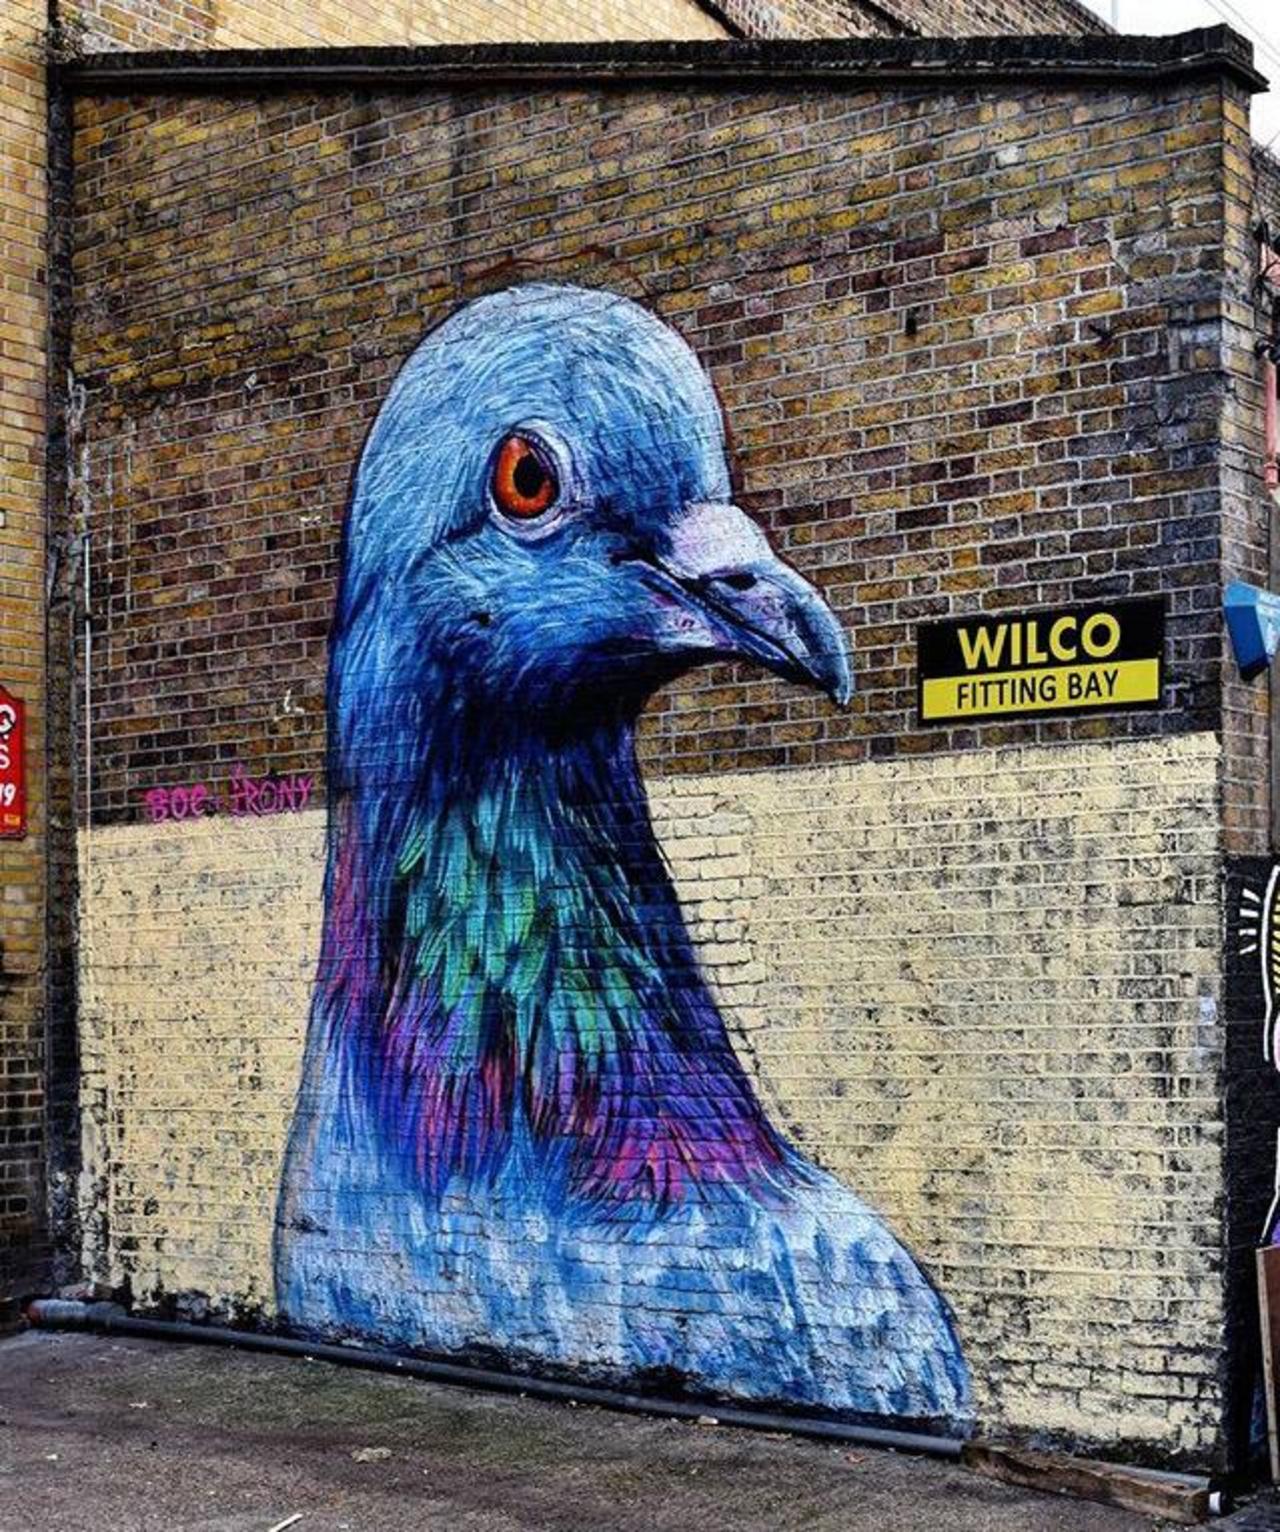 Street Art by Placee Boe & whoamirony in London 

#art #graffiti #mural #streetart http://t.co/NwEwXmotg8